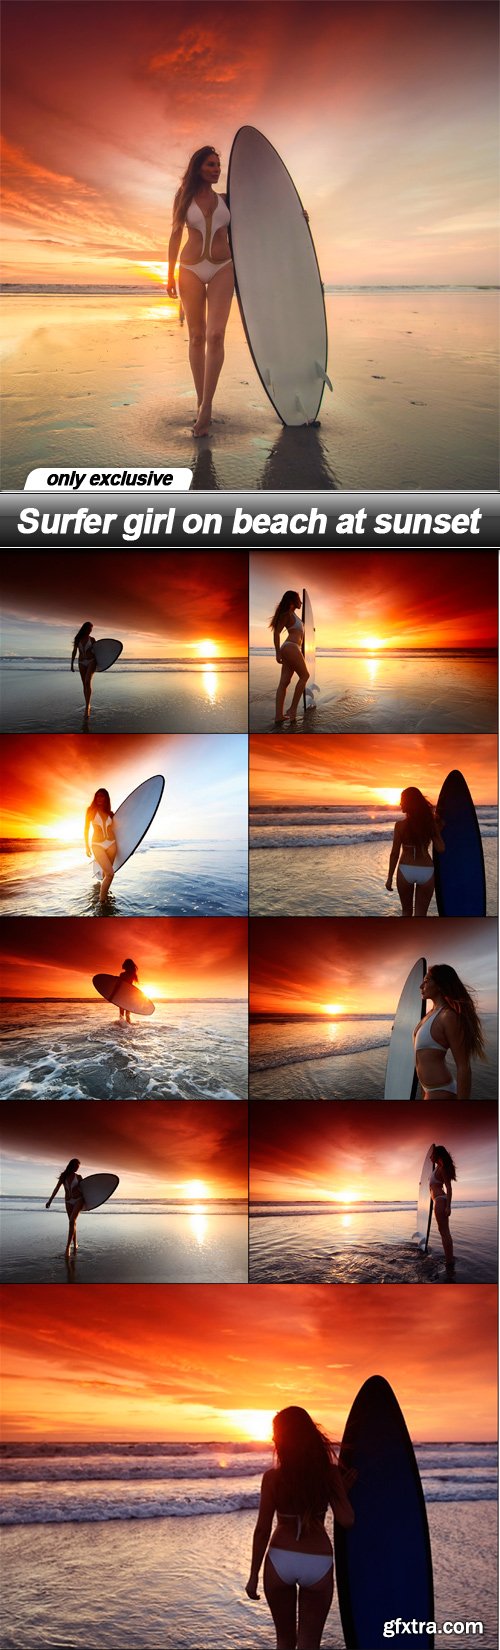 Surfer girl on beach at sunset - 10 UHQ JPEG